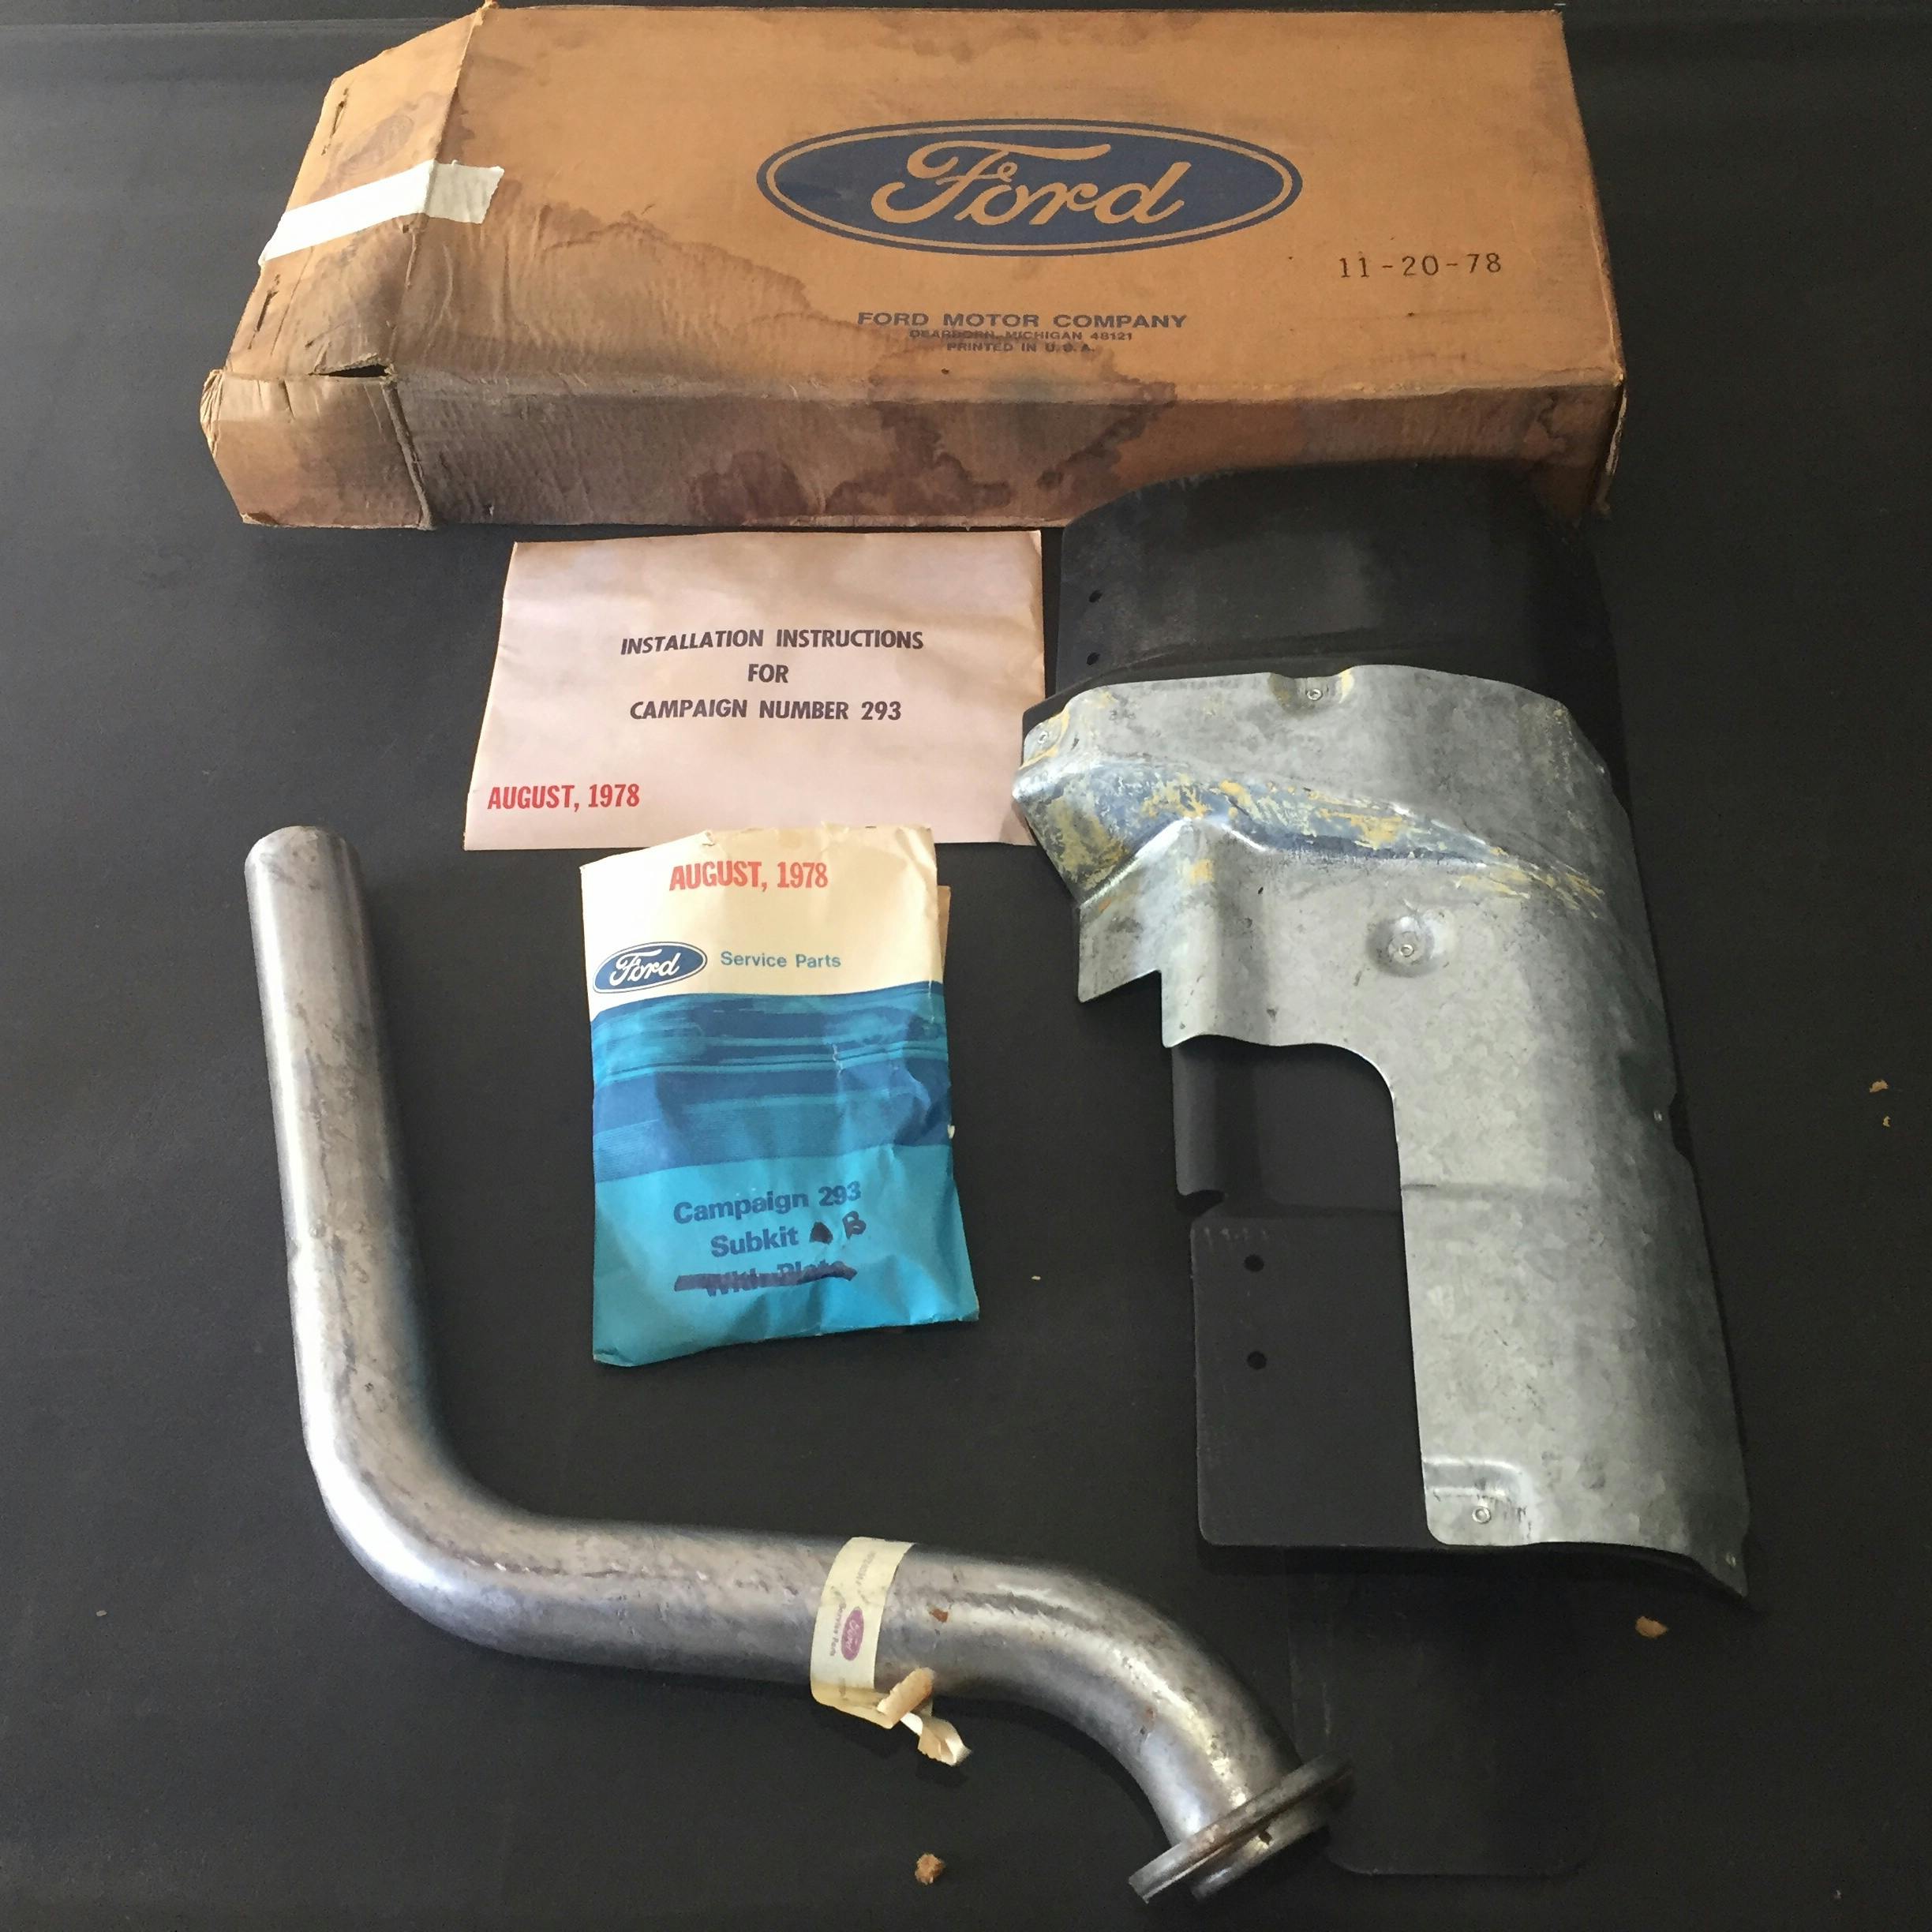 Ford Pinto Repair Kit Recall Gas tank